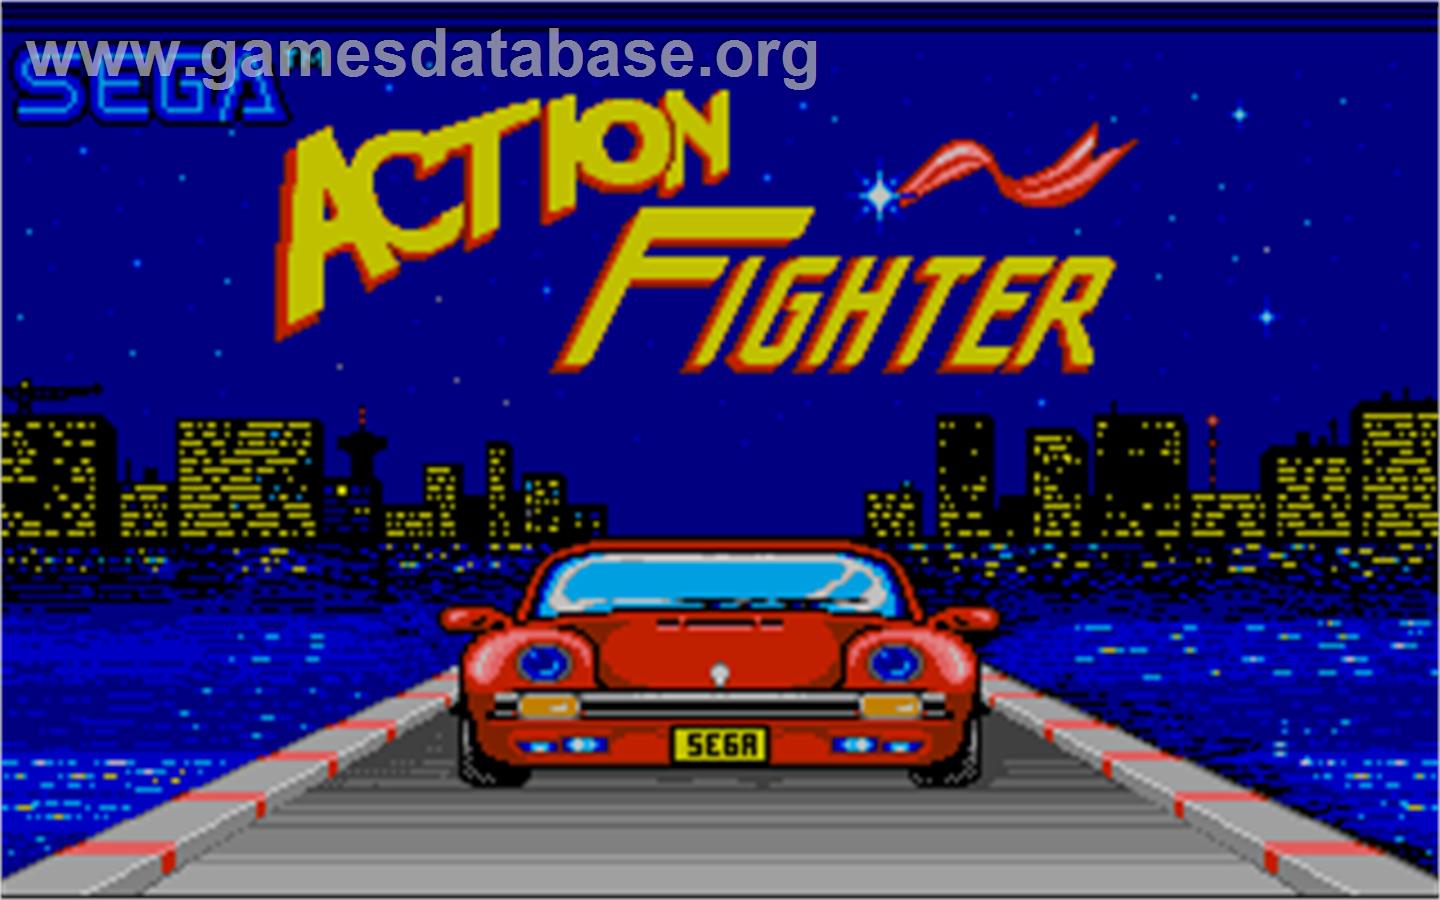 Action Fighter - Atari ST - Artwork - Title Screen